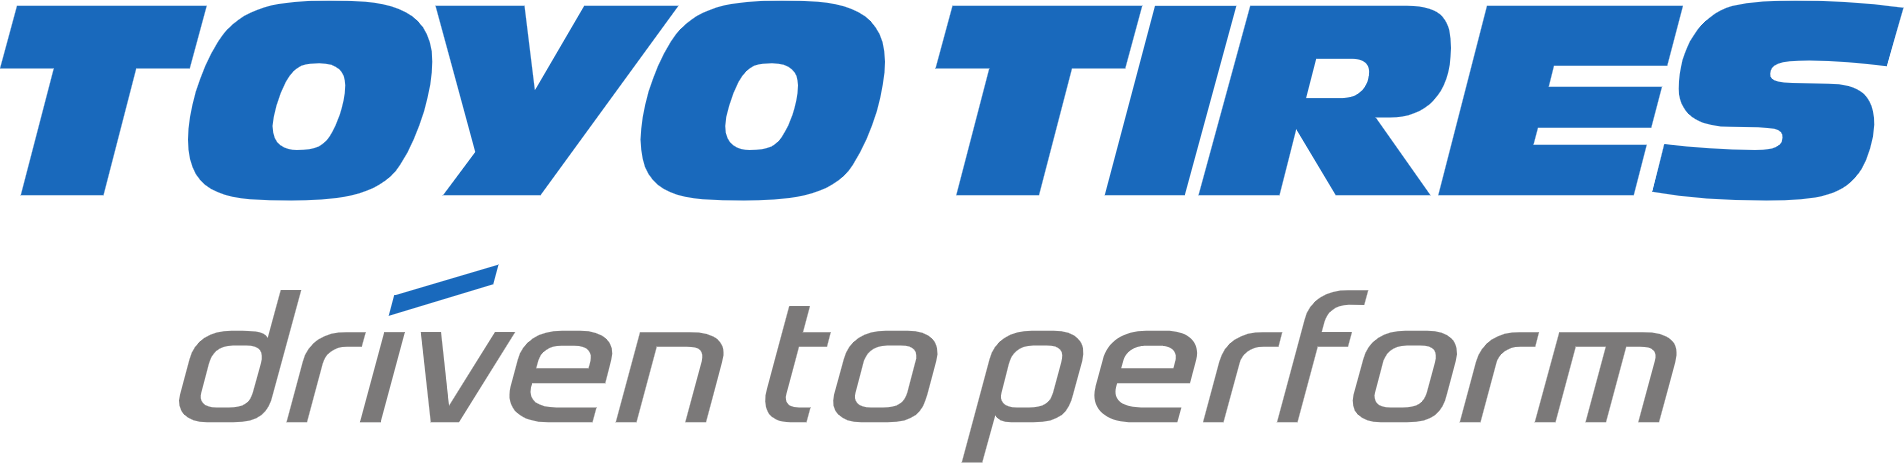 Toyo Tire logo (PNG transparent)